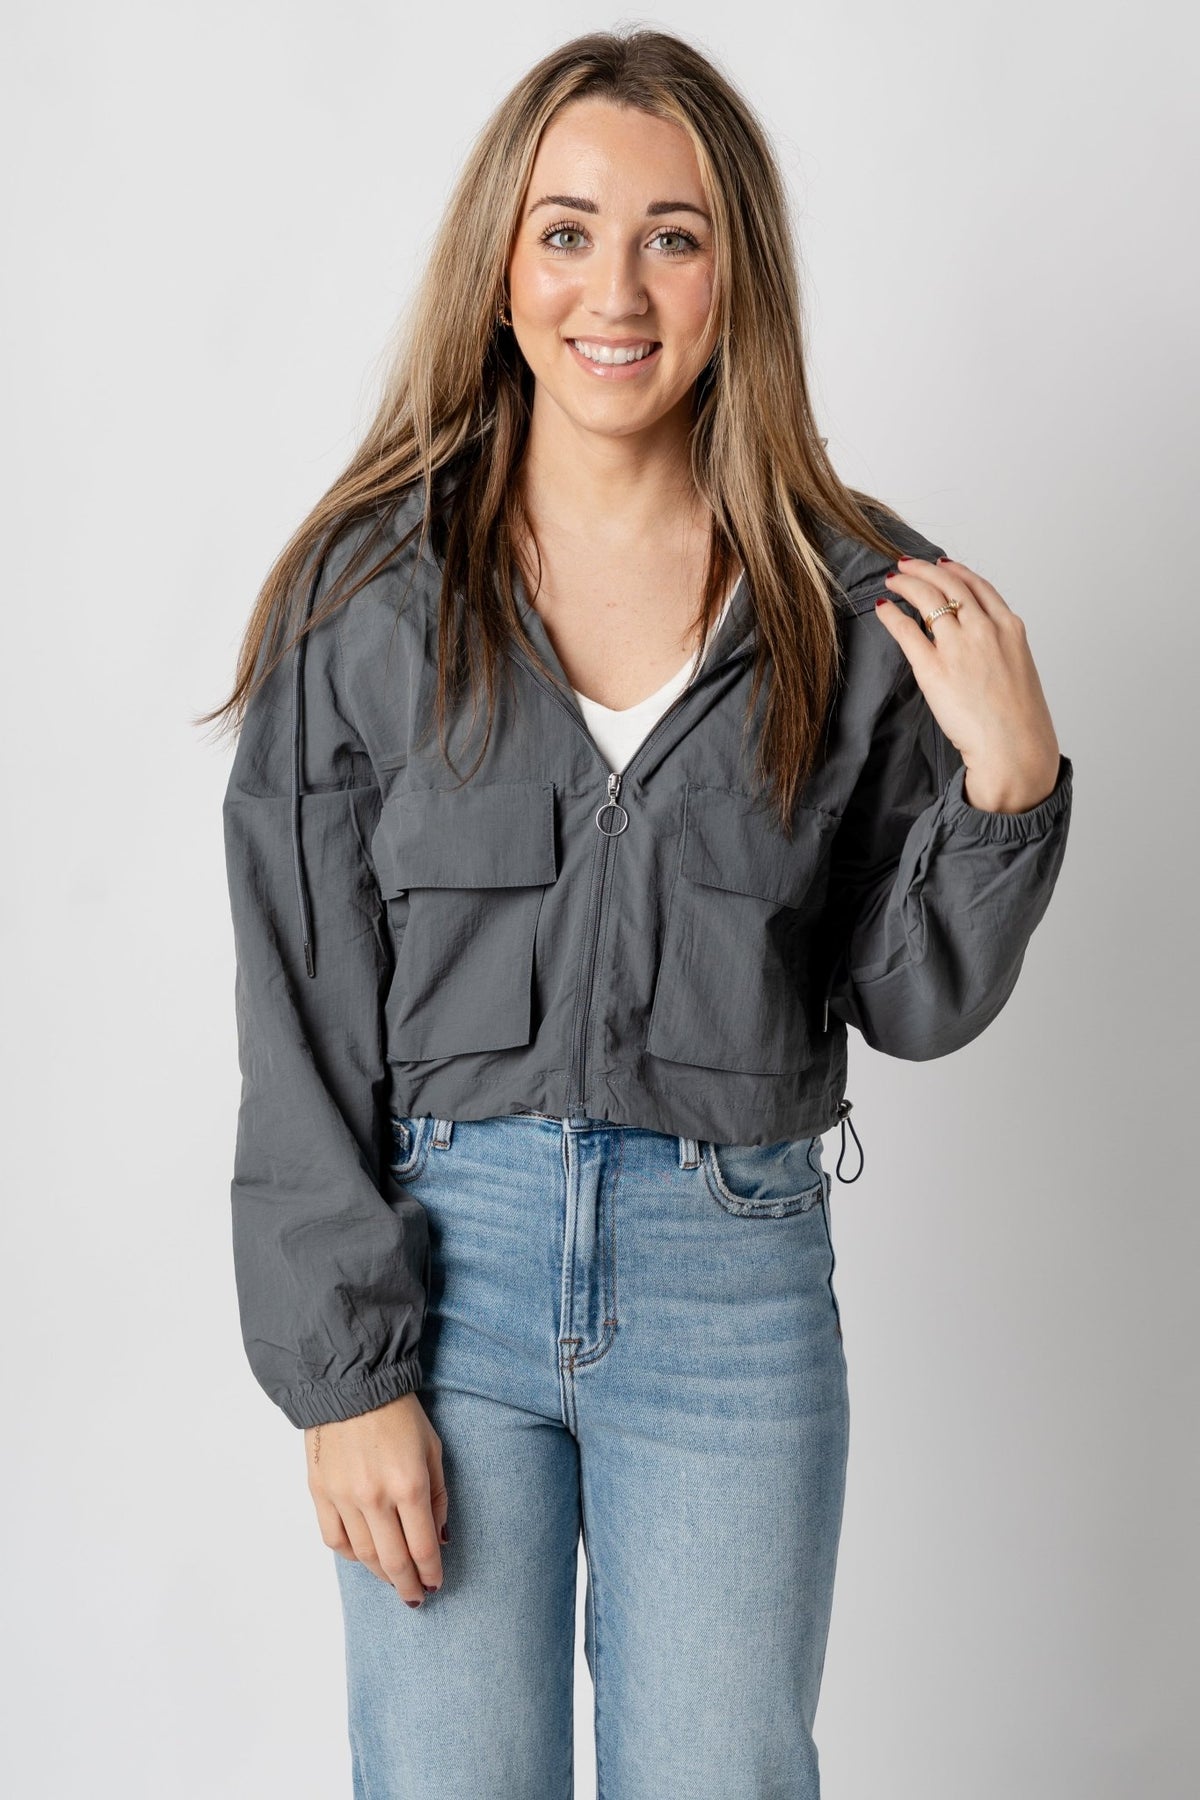 Lightweight nylon cargo jacket charcoal – Trendy Jackets | Cute Fashion Blazers at Lush Fashion Lounge Boutique in Oklahoma City